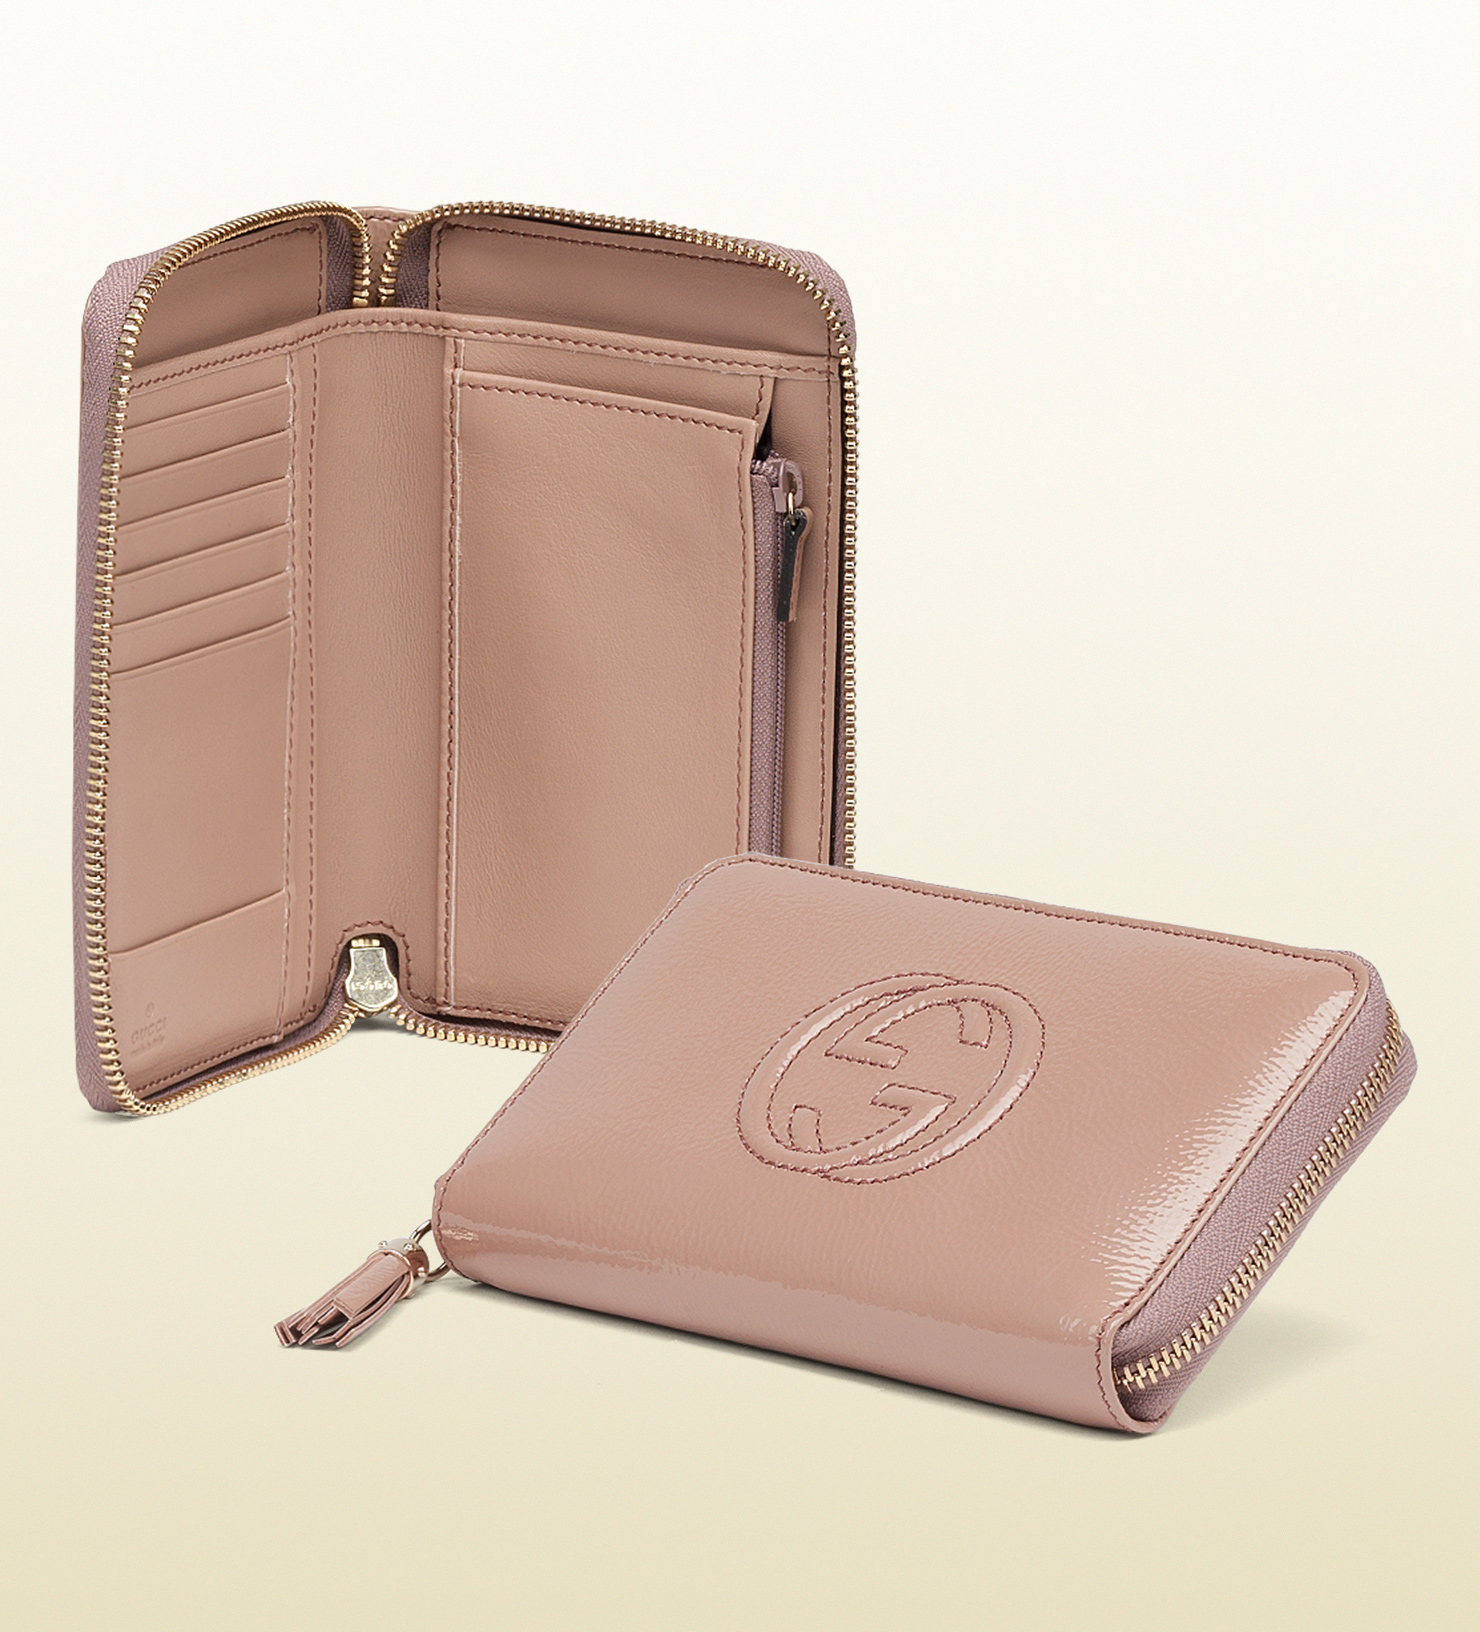 Gucci Soho Pale Pink Soft Patent Leather Medium Zip Around Wallet - Lyst